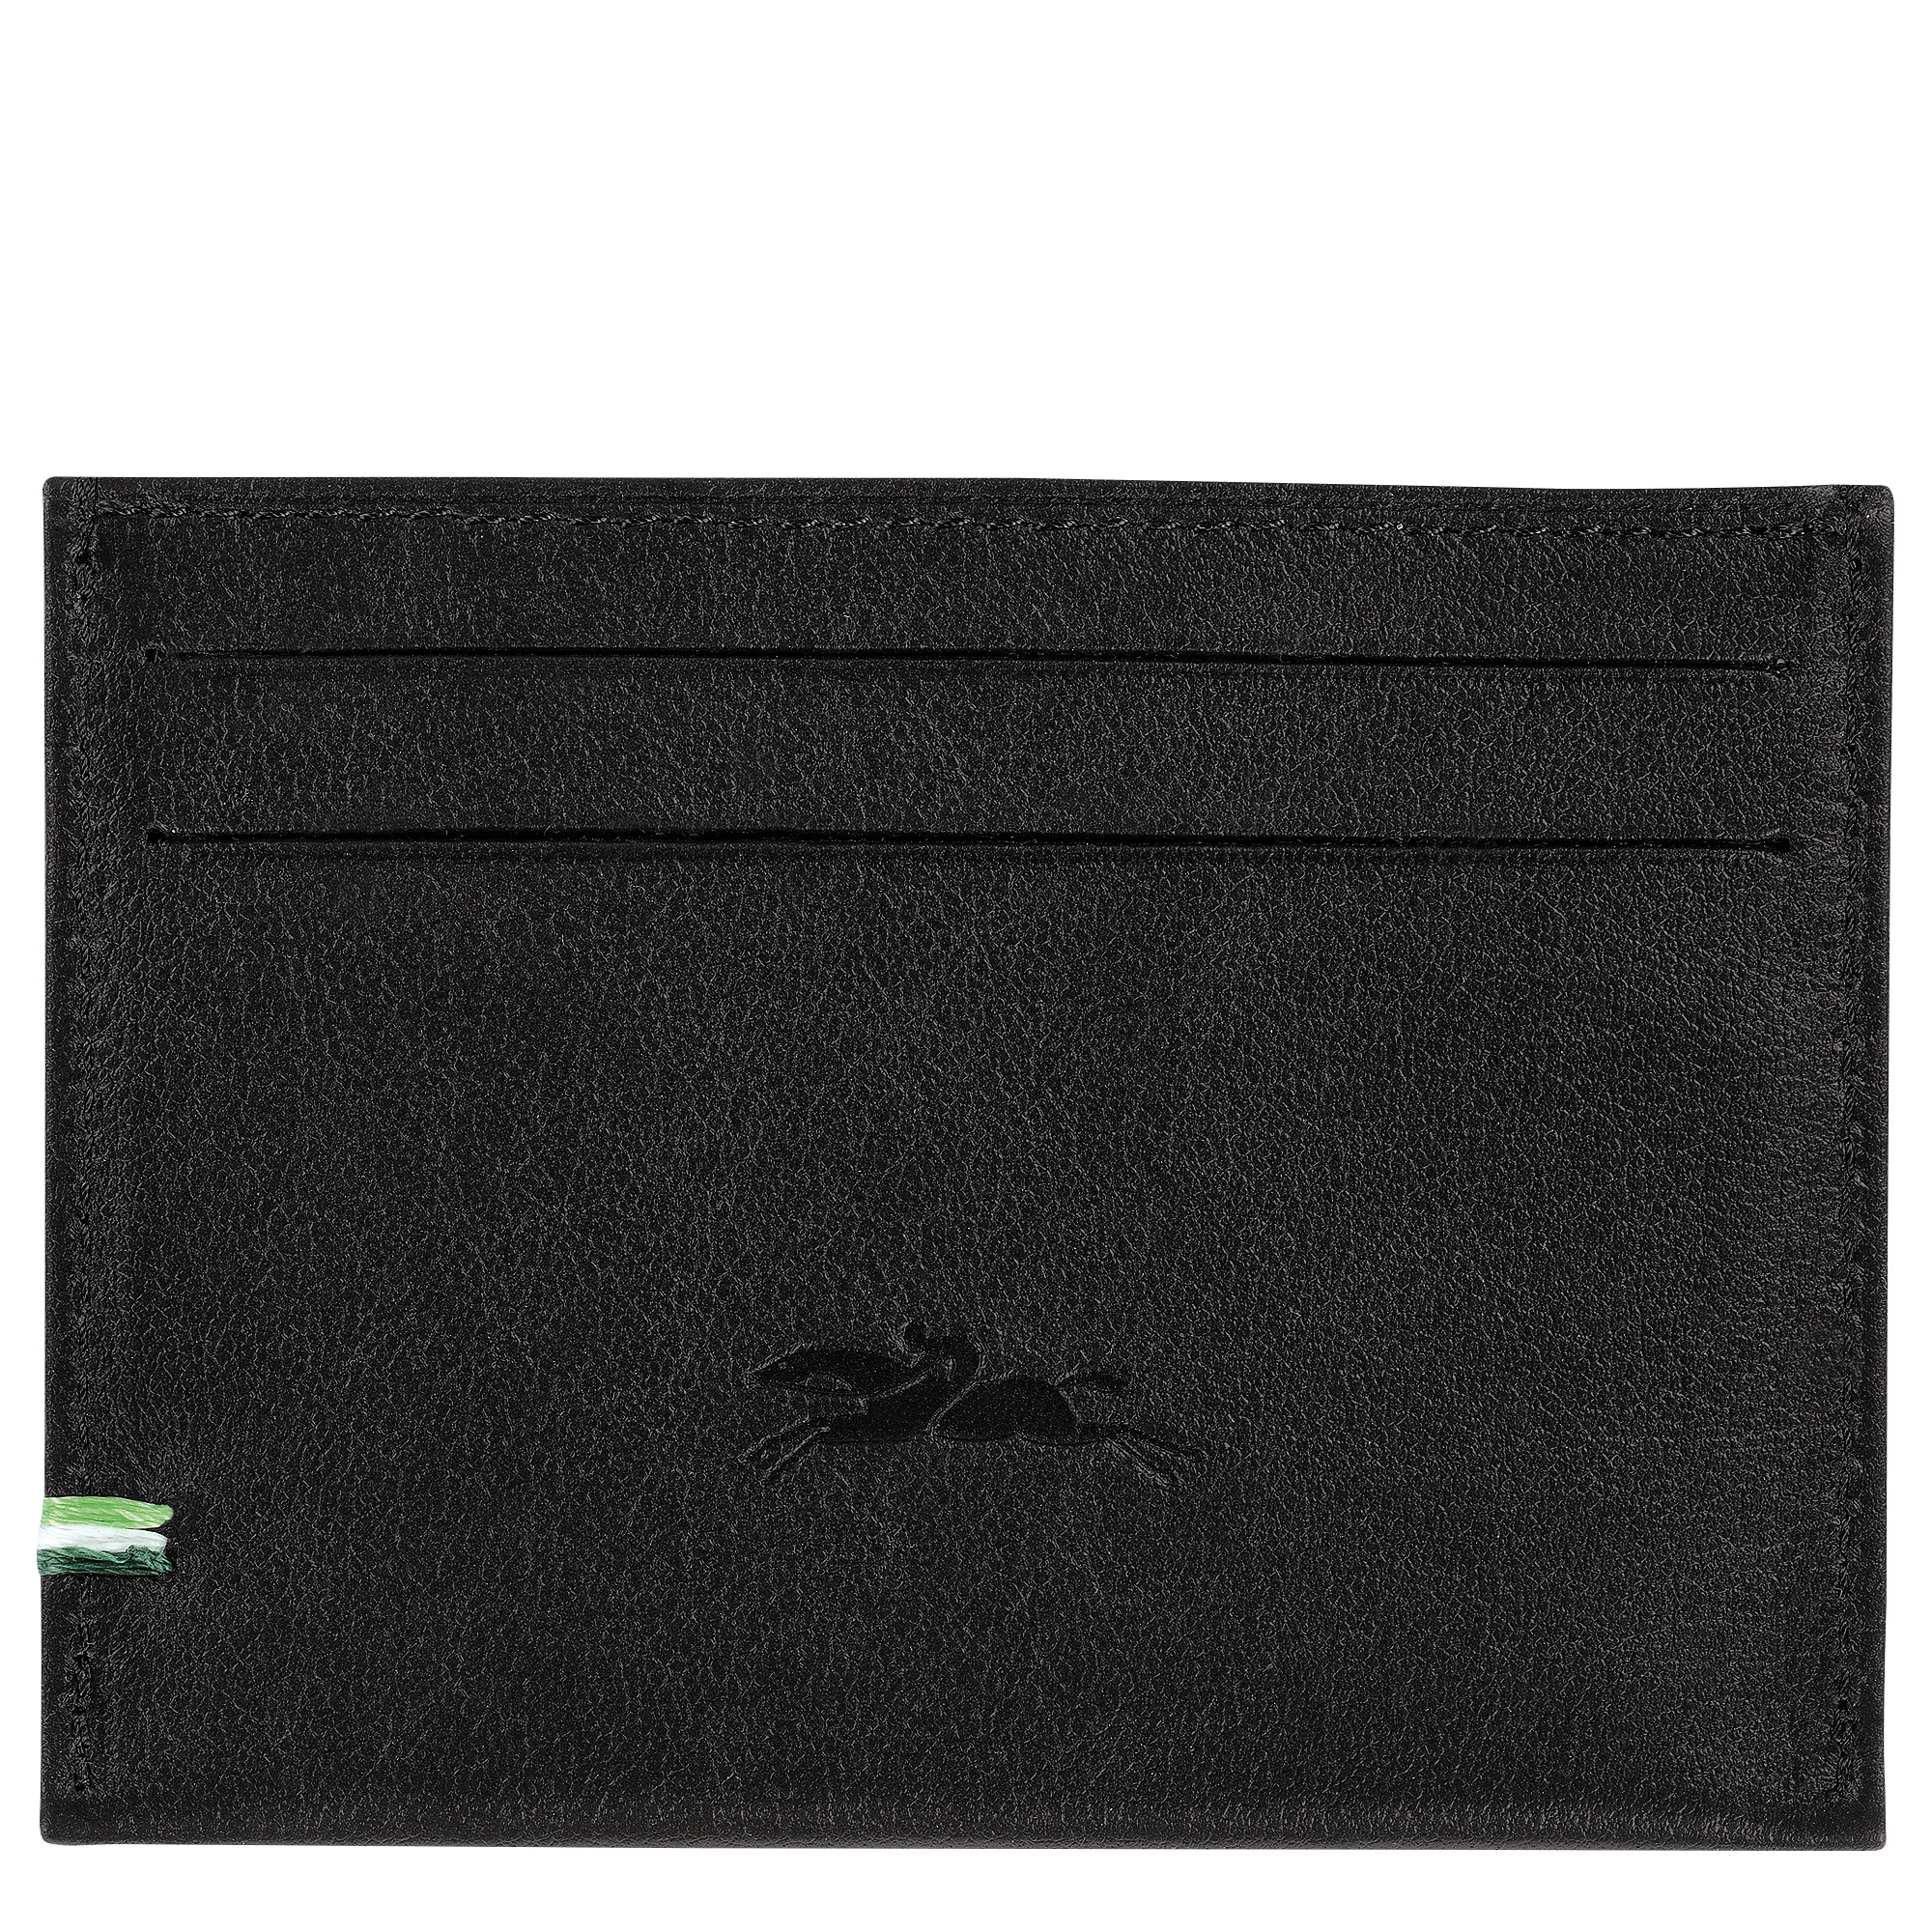 Longchamp sur Seine Card holder Black - Leather - 2